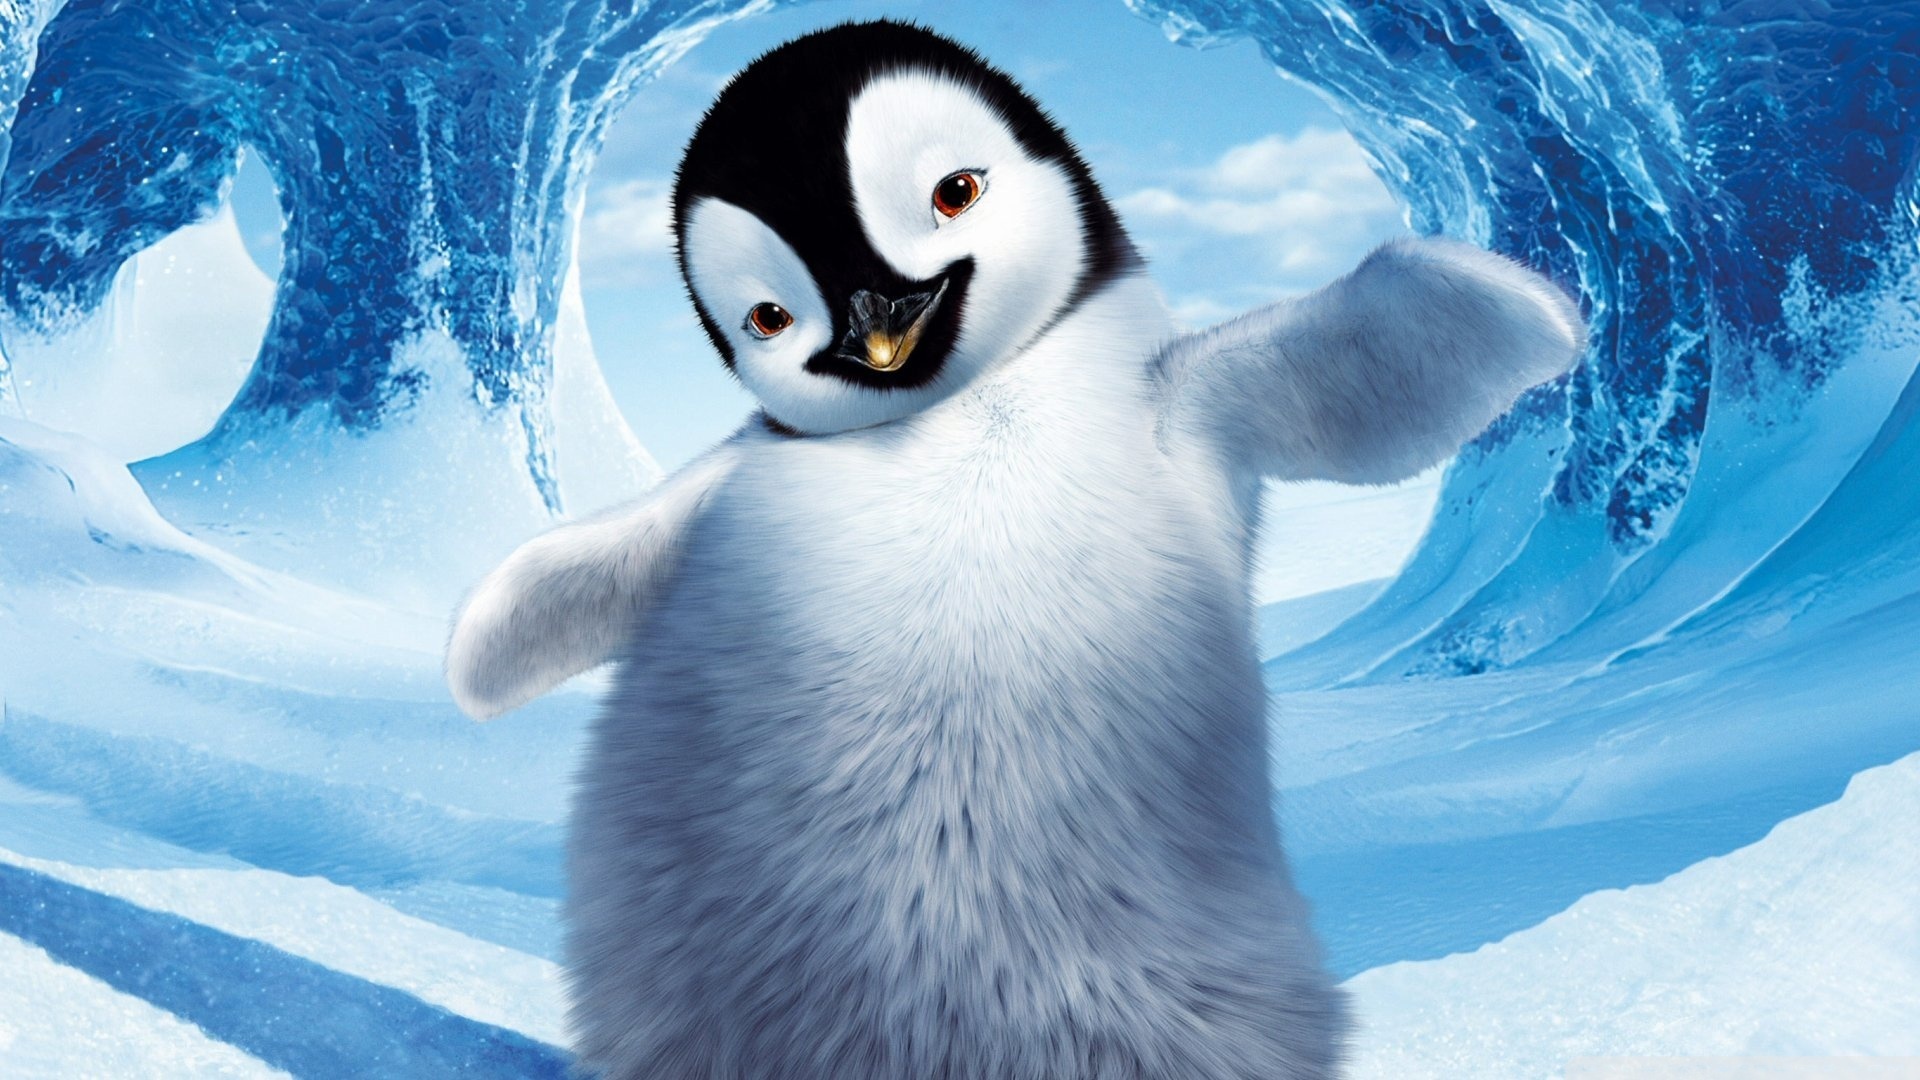 Penguins Image Photo Desktop Wallpaper Pictures